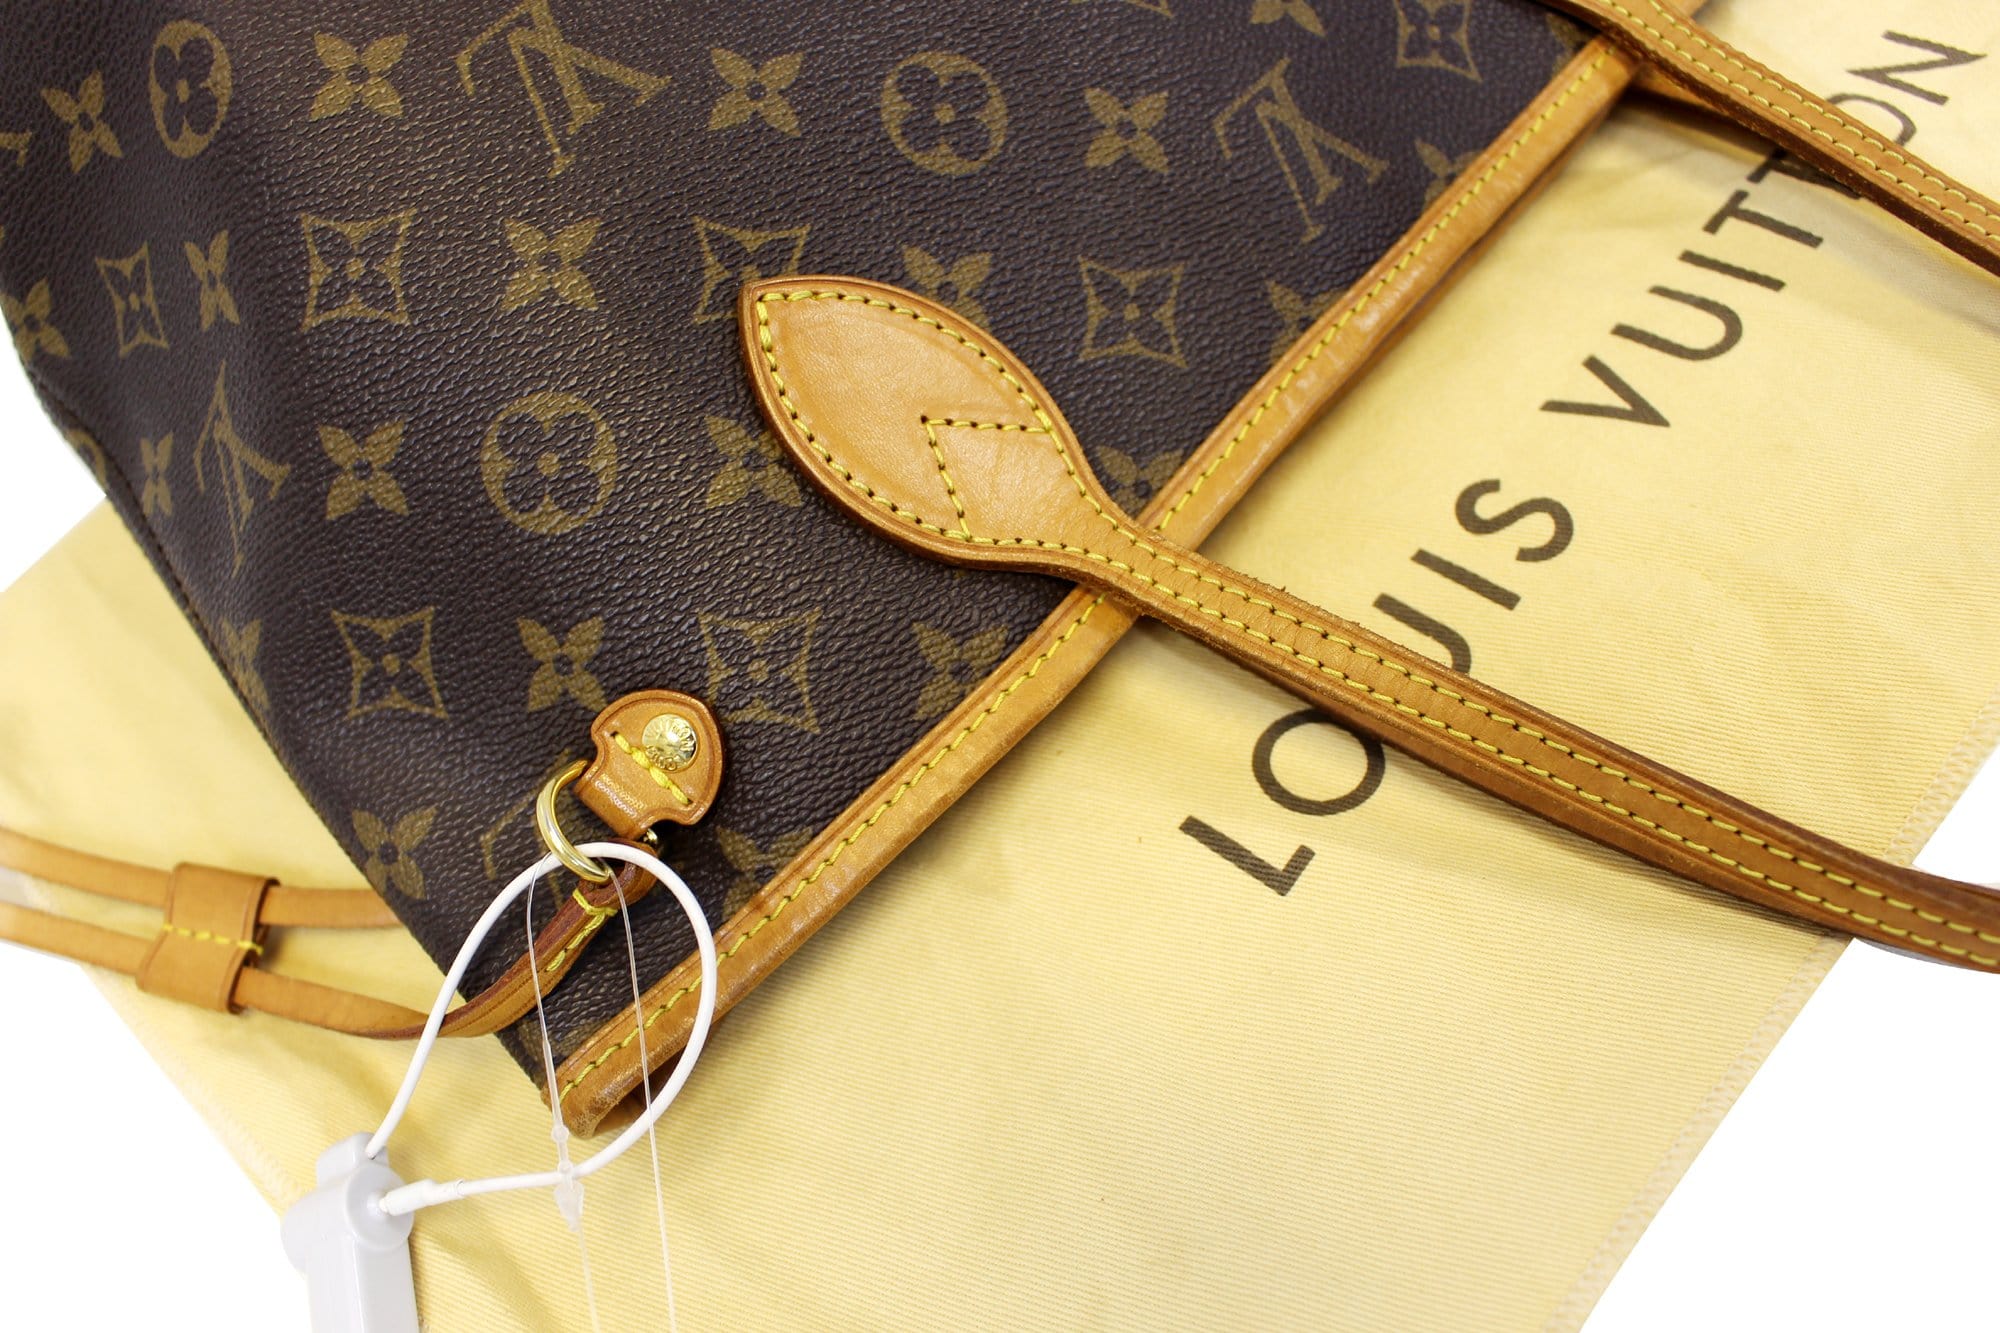 Louis Vuitton Classic Monogram Neverfull PM Tote Shoulder Bag